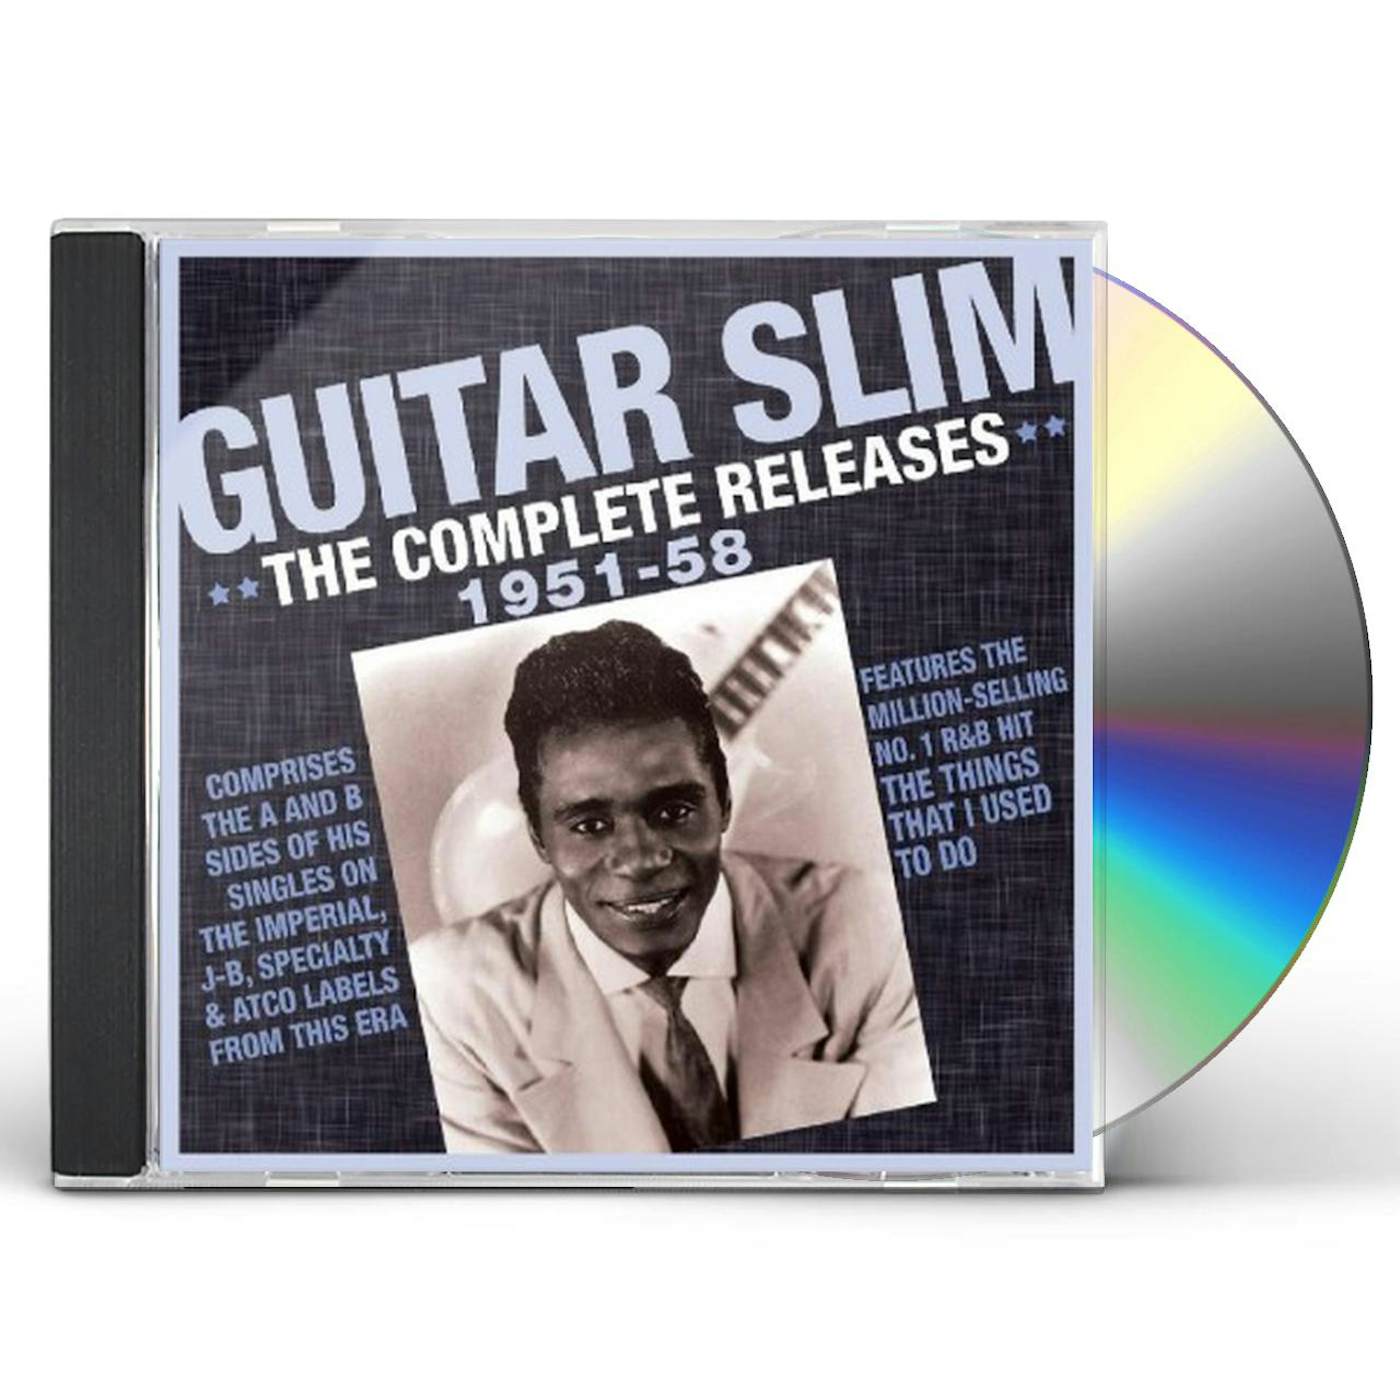 Guitar Slim COMPLETE RELEASES 1951-58 CD